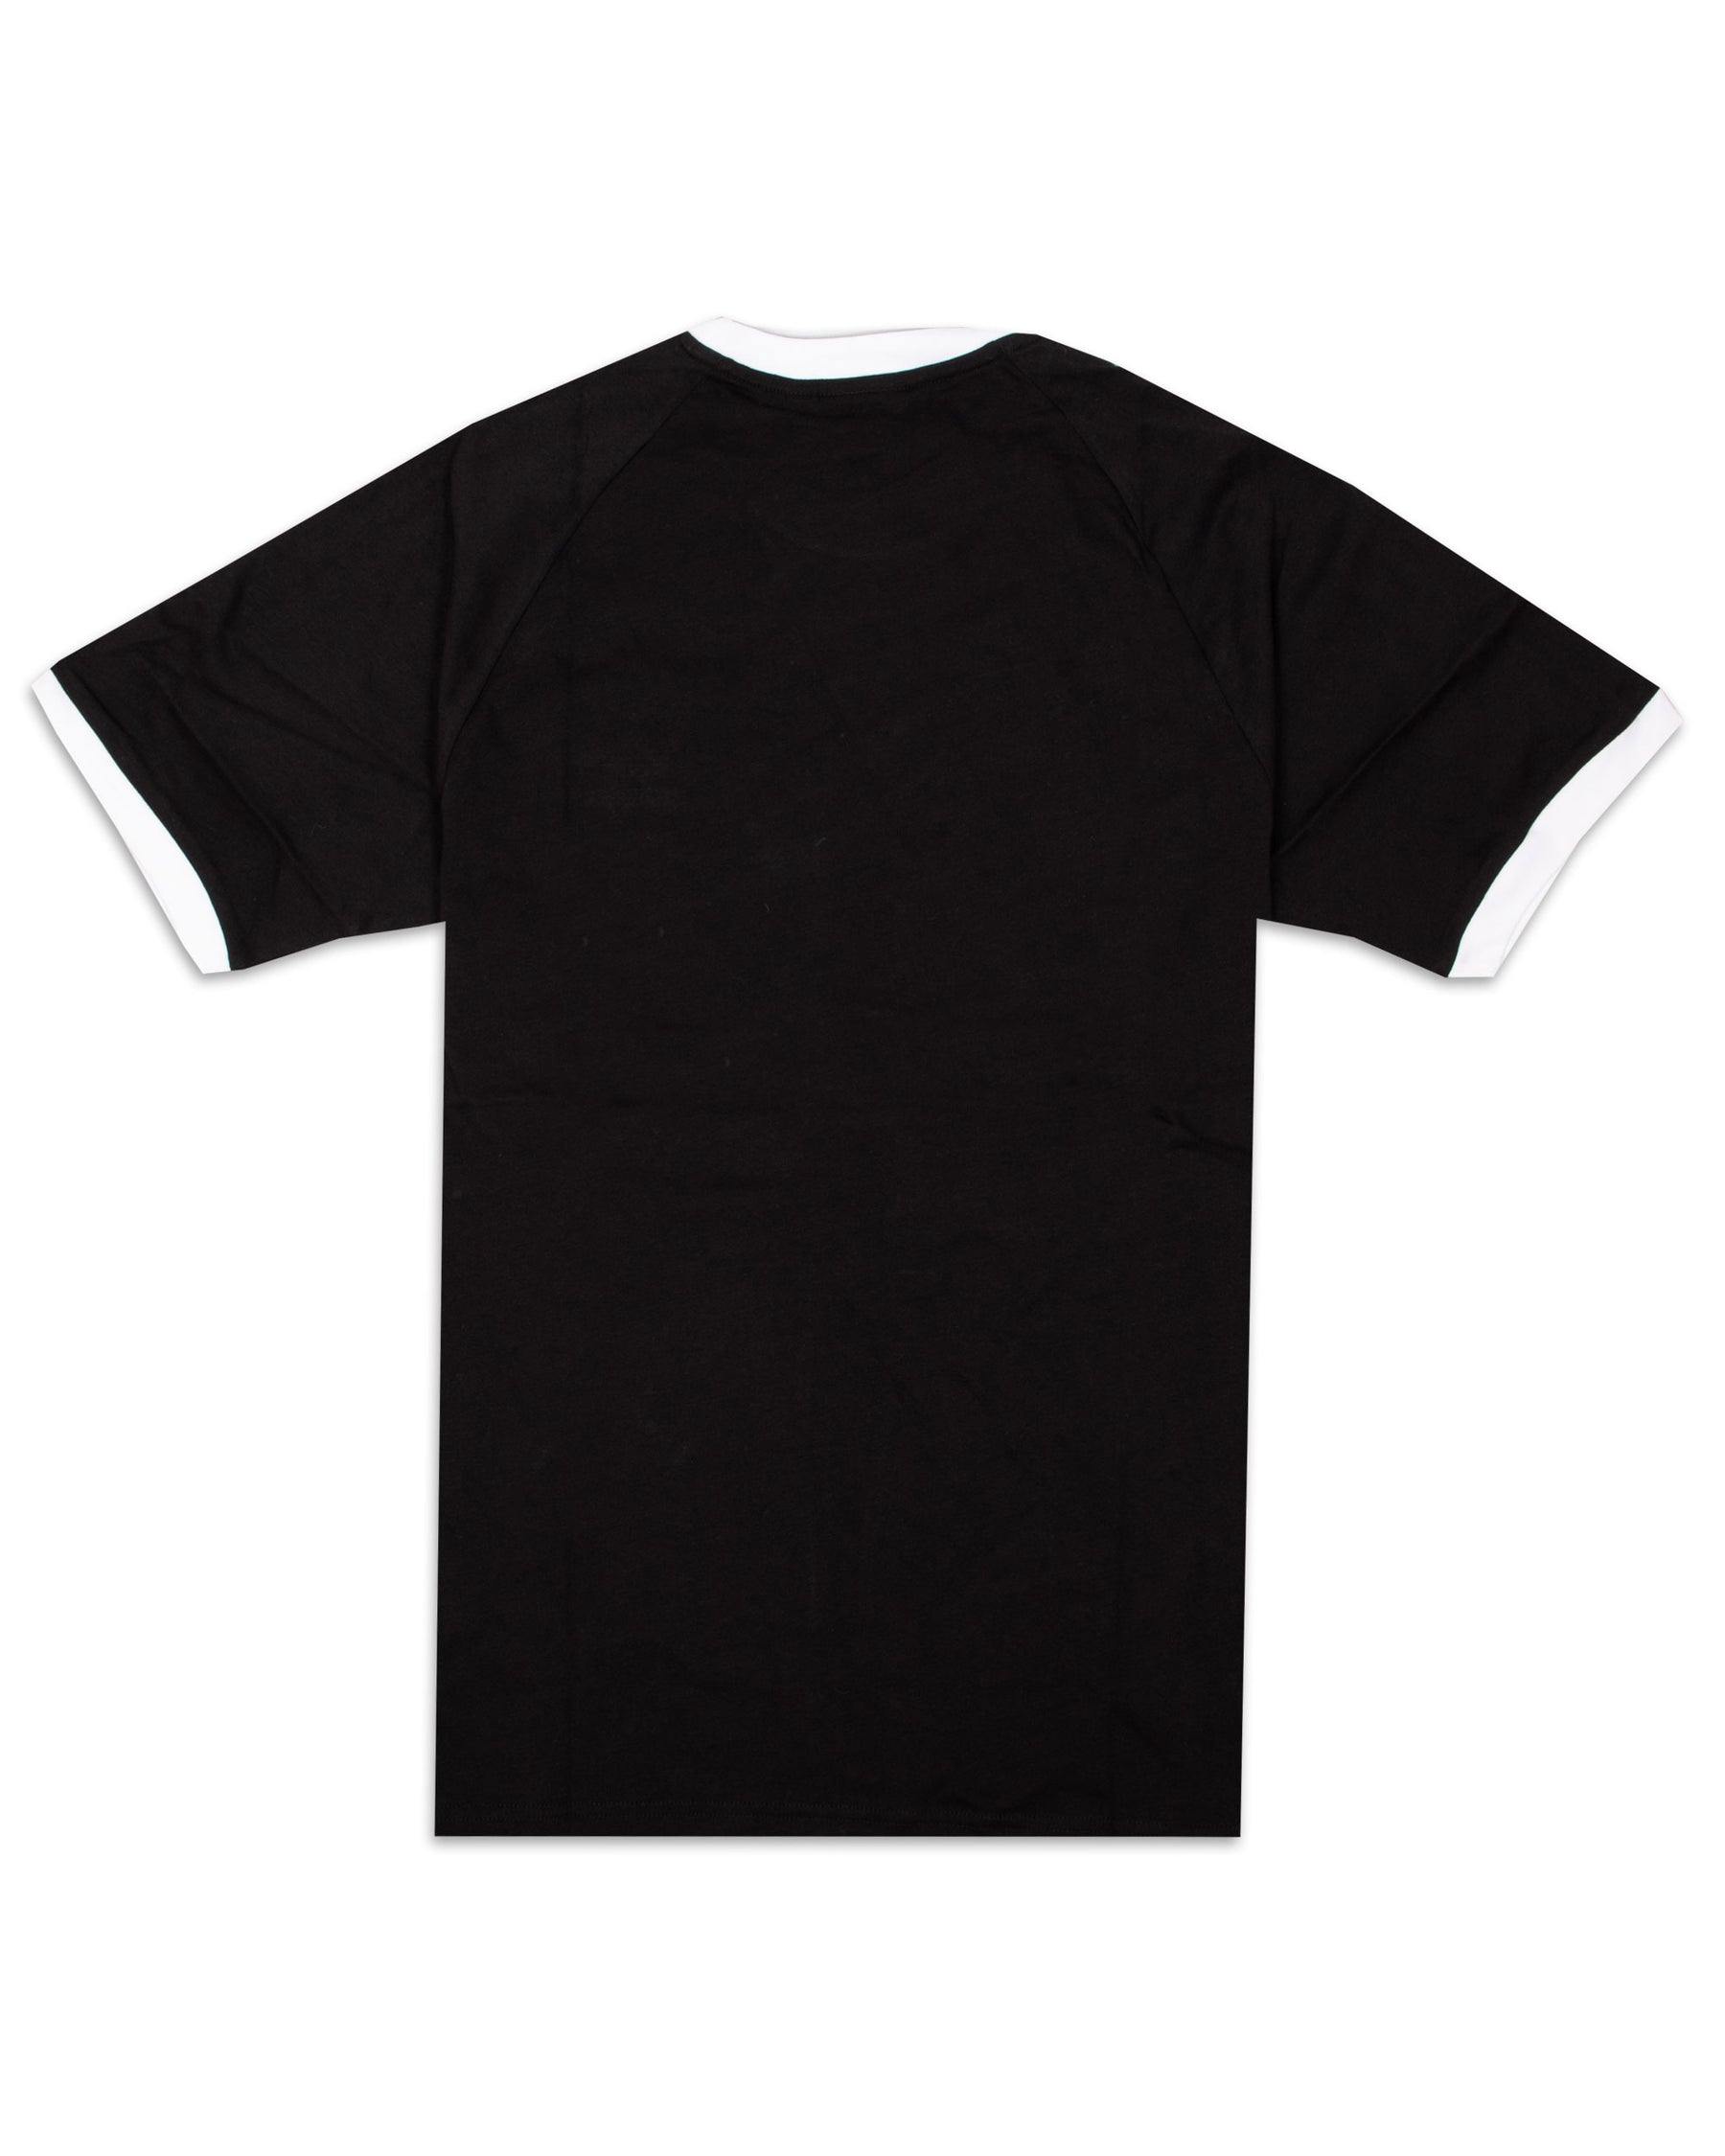 T-Shirt Uomo Adidas 3 Stripes Nero